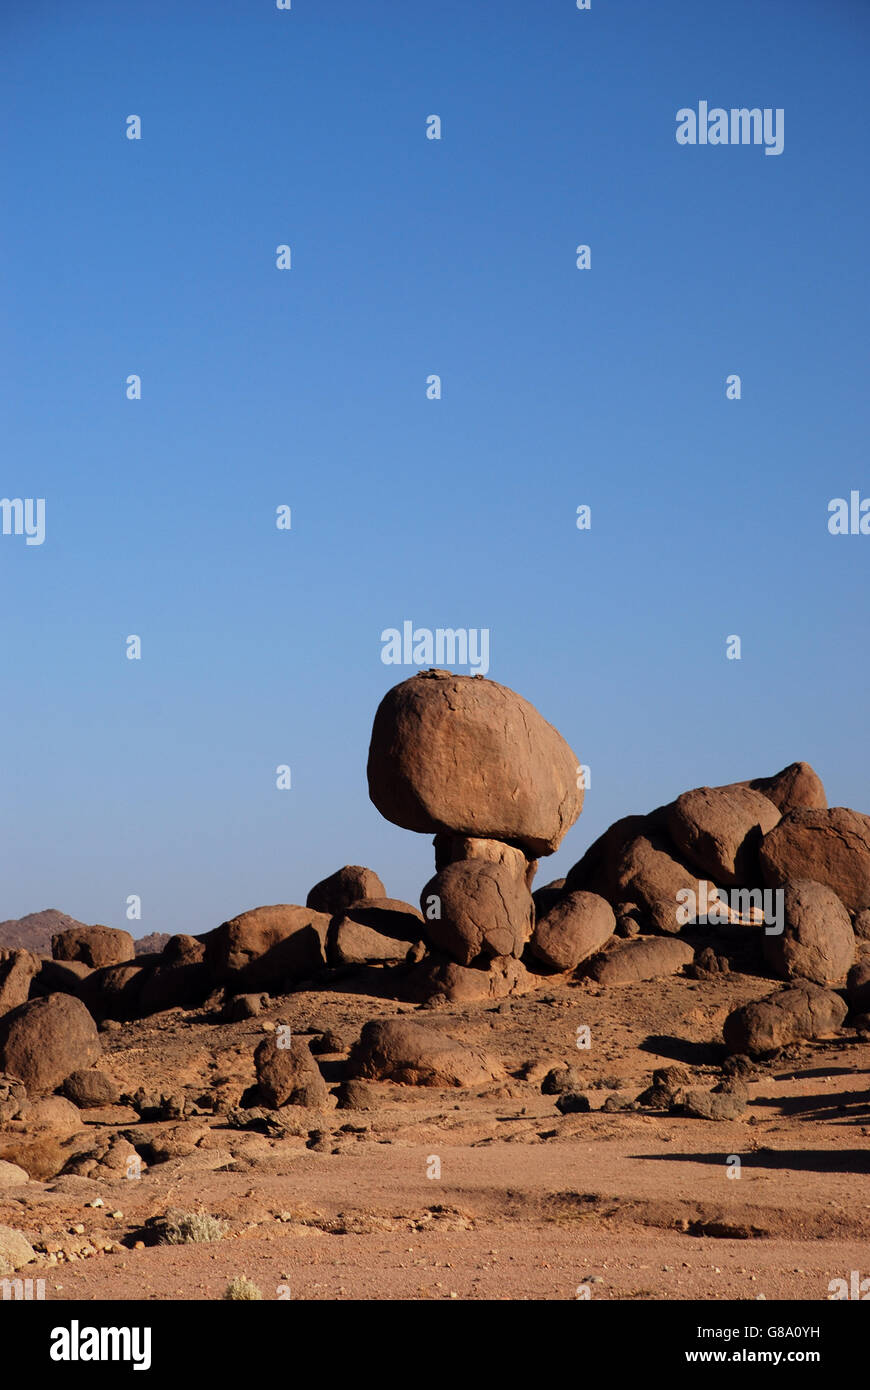 desert, Algeria, mushroom, rocks, stones, rock formation, blue sky Stock Photo